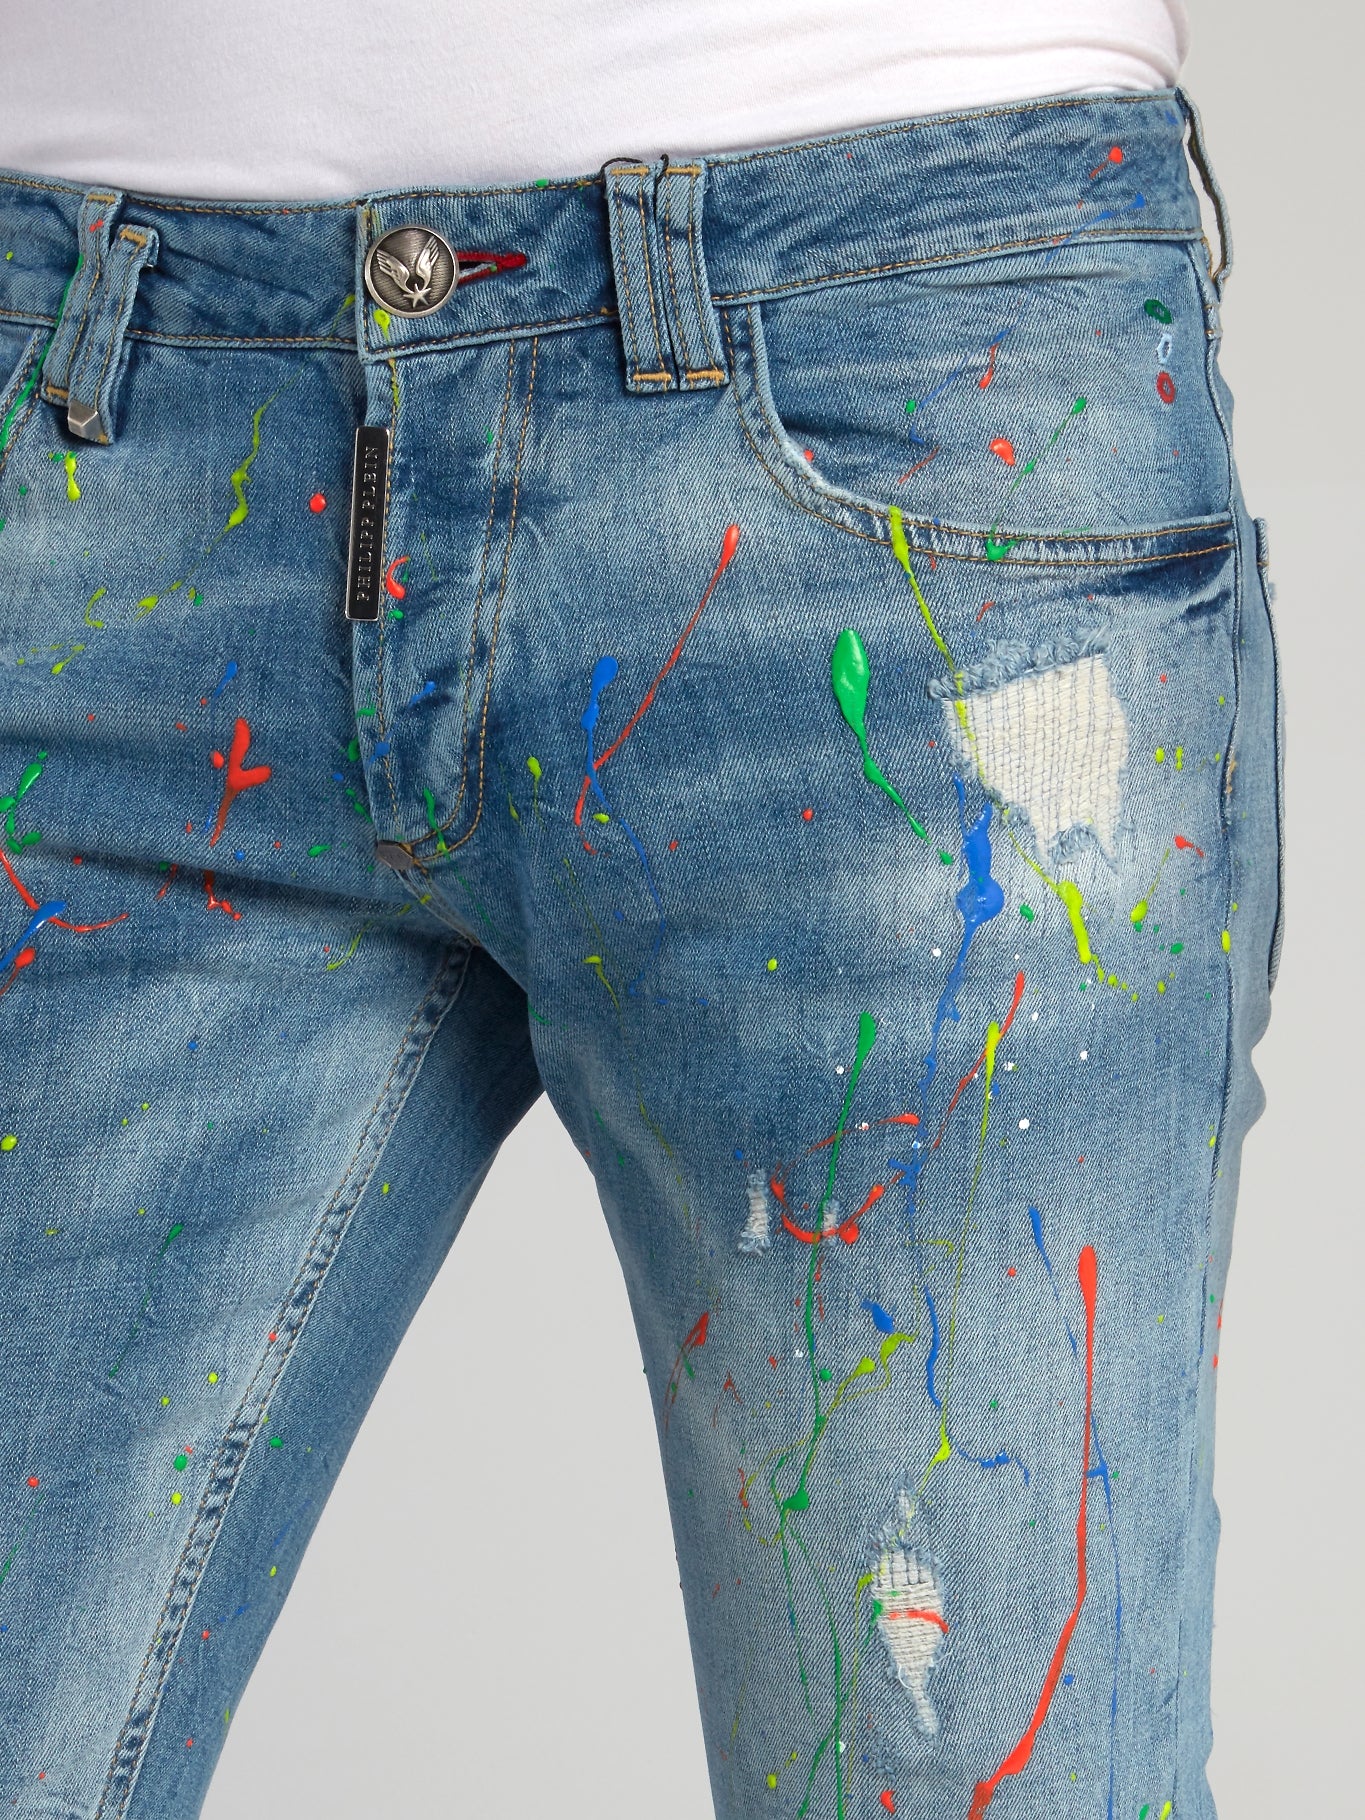 Black Paint Splatter Distressed Jeans